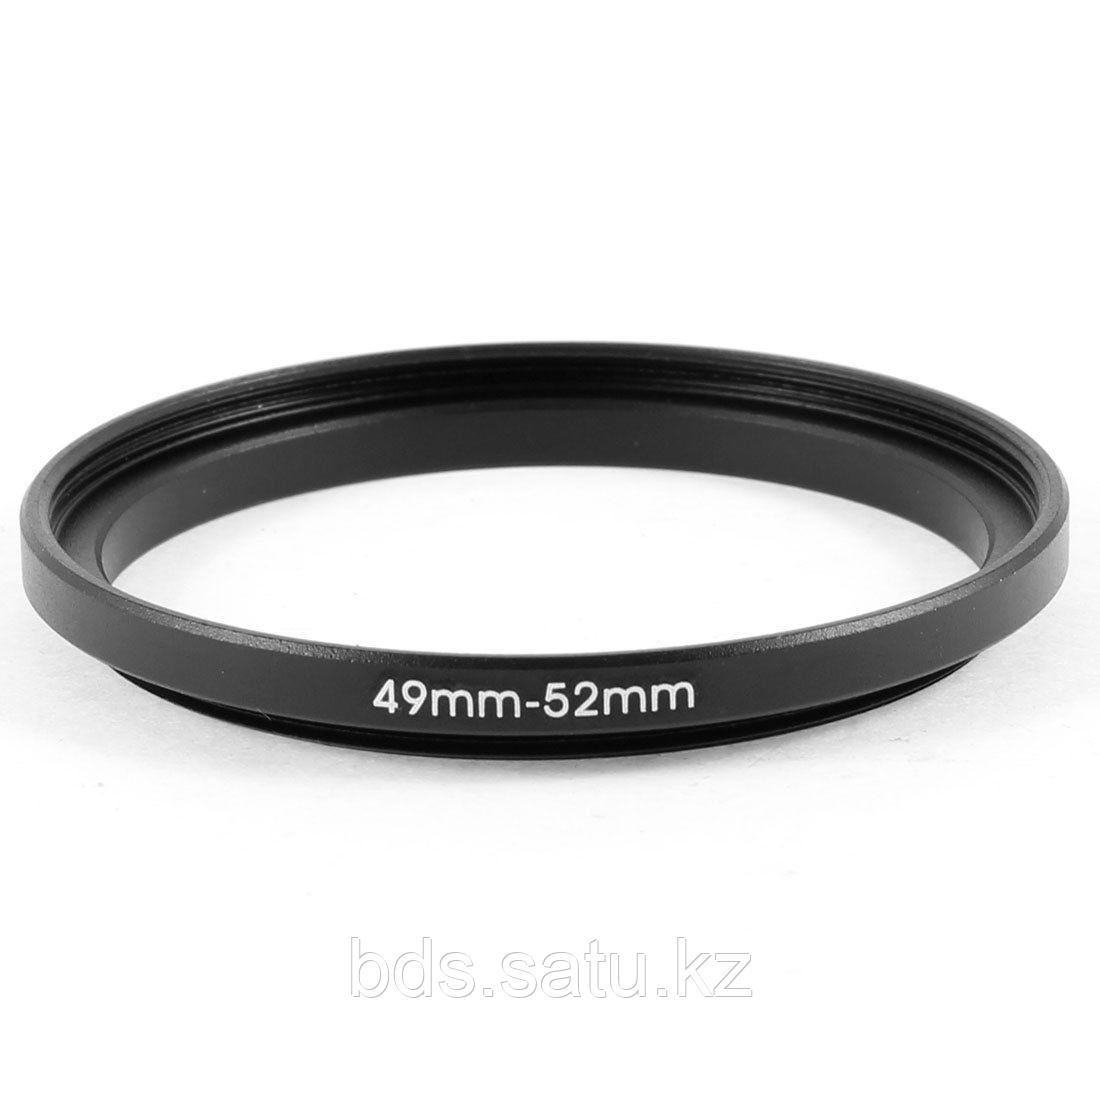 Переходное кольцо 49mm to 52mm Step-Up Ring Lens-to-Filter/Converter Lens